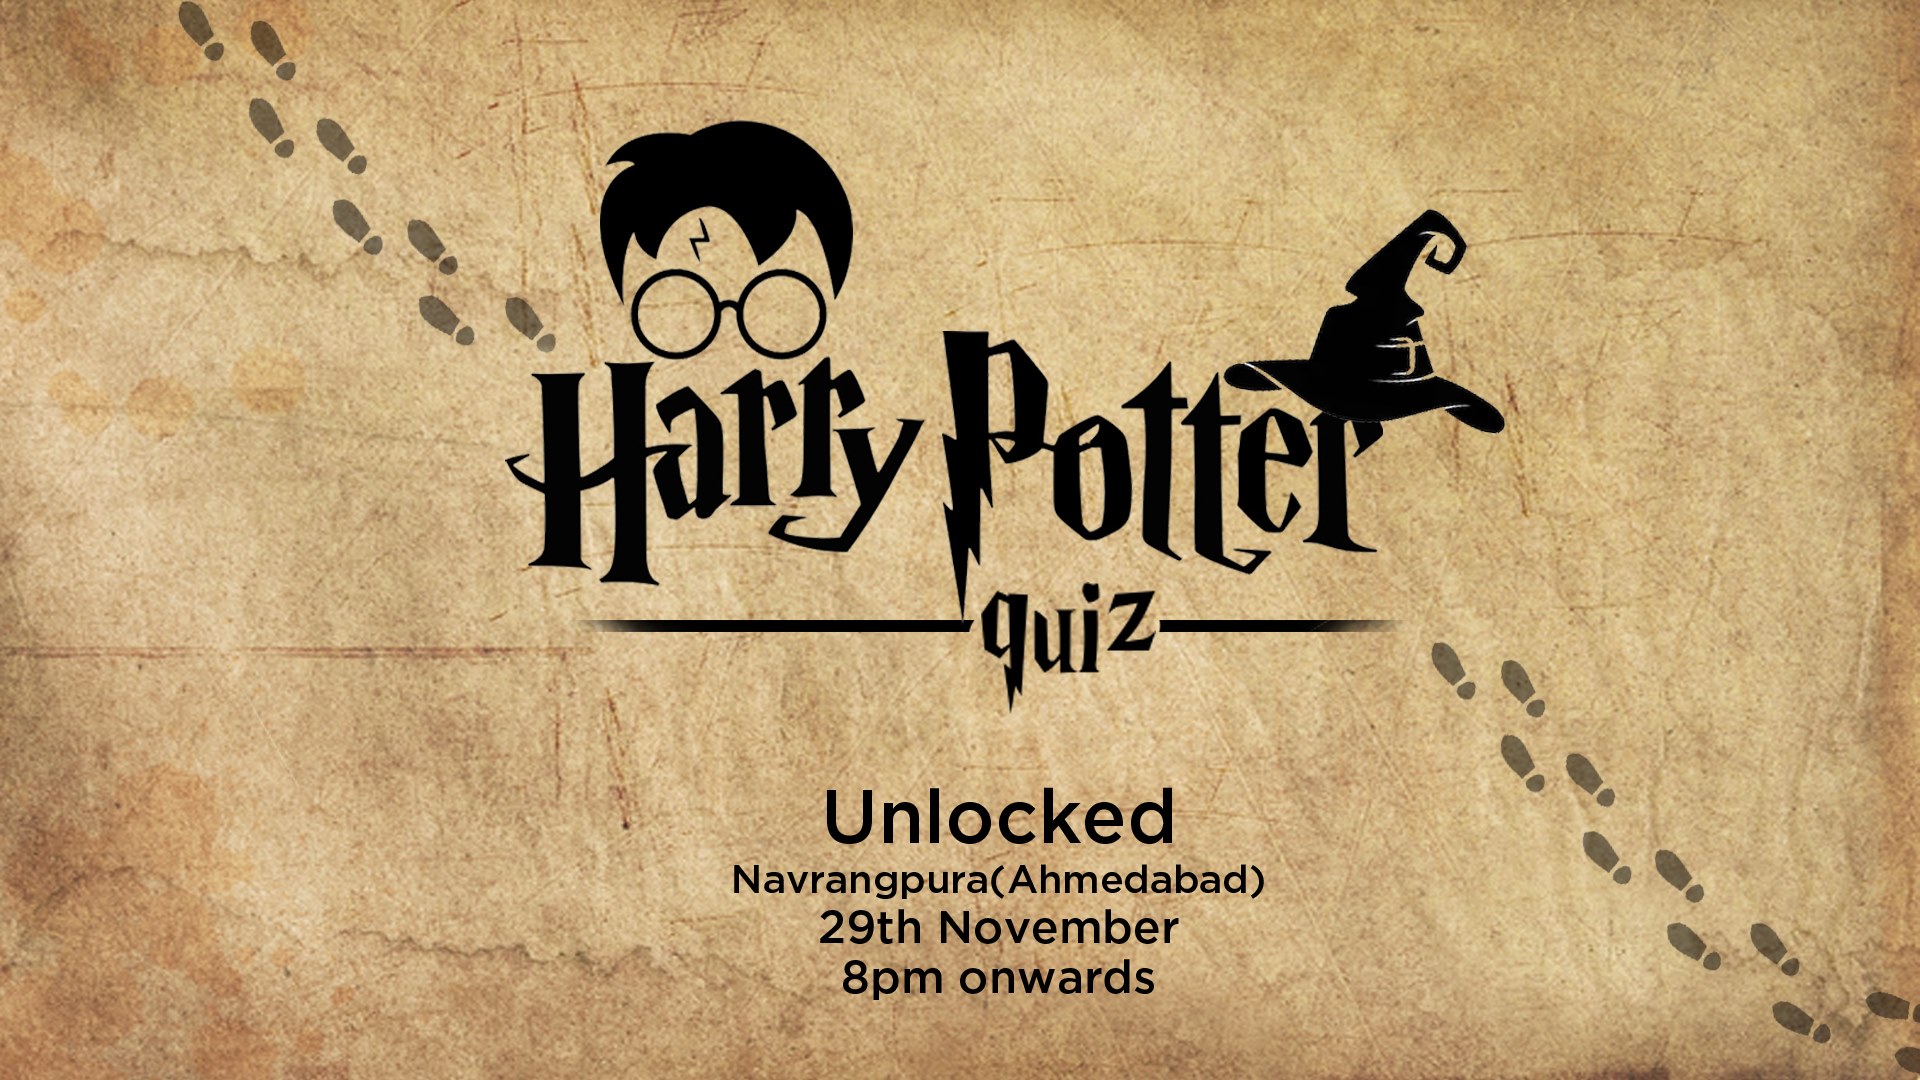 Harry Potter Quiz at Unlocked (Ahmedabad) - Creative Yatra